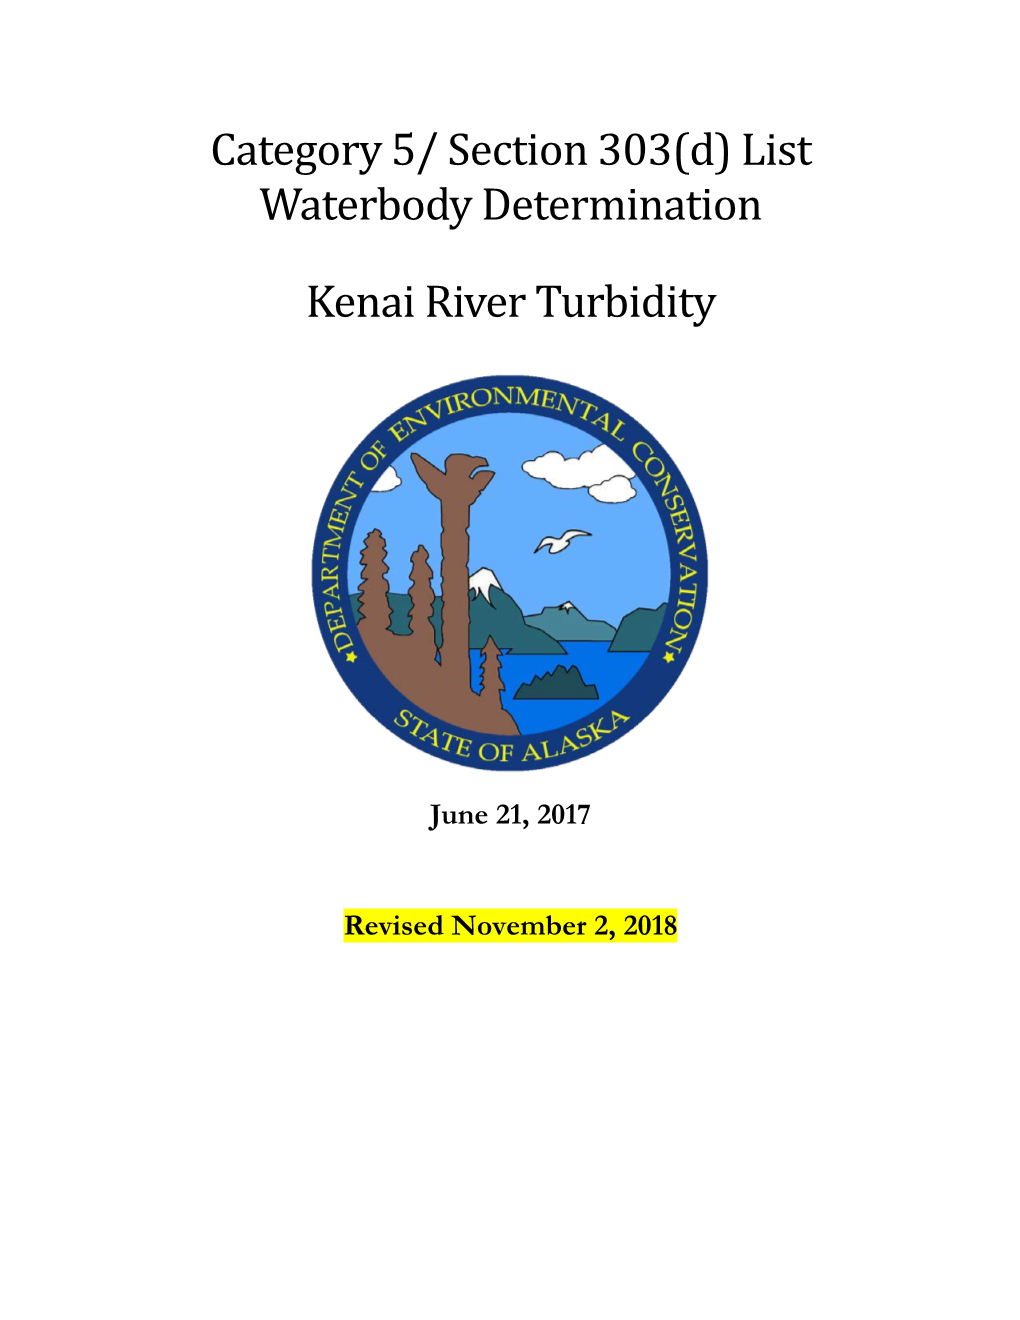 Section 303(D) List Waterbody Determination Kenai River Turbidity